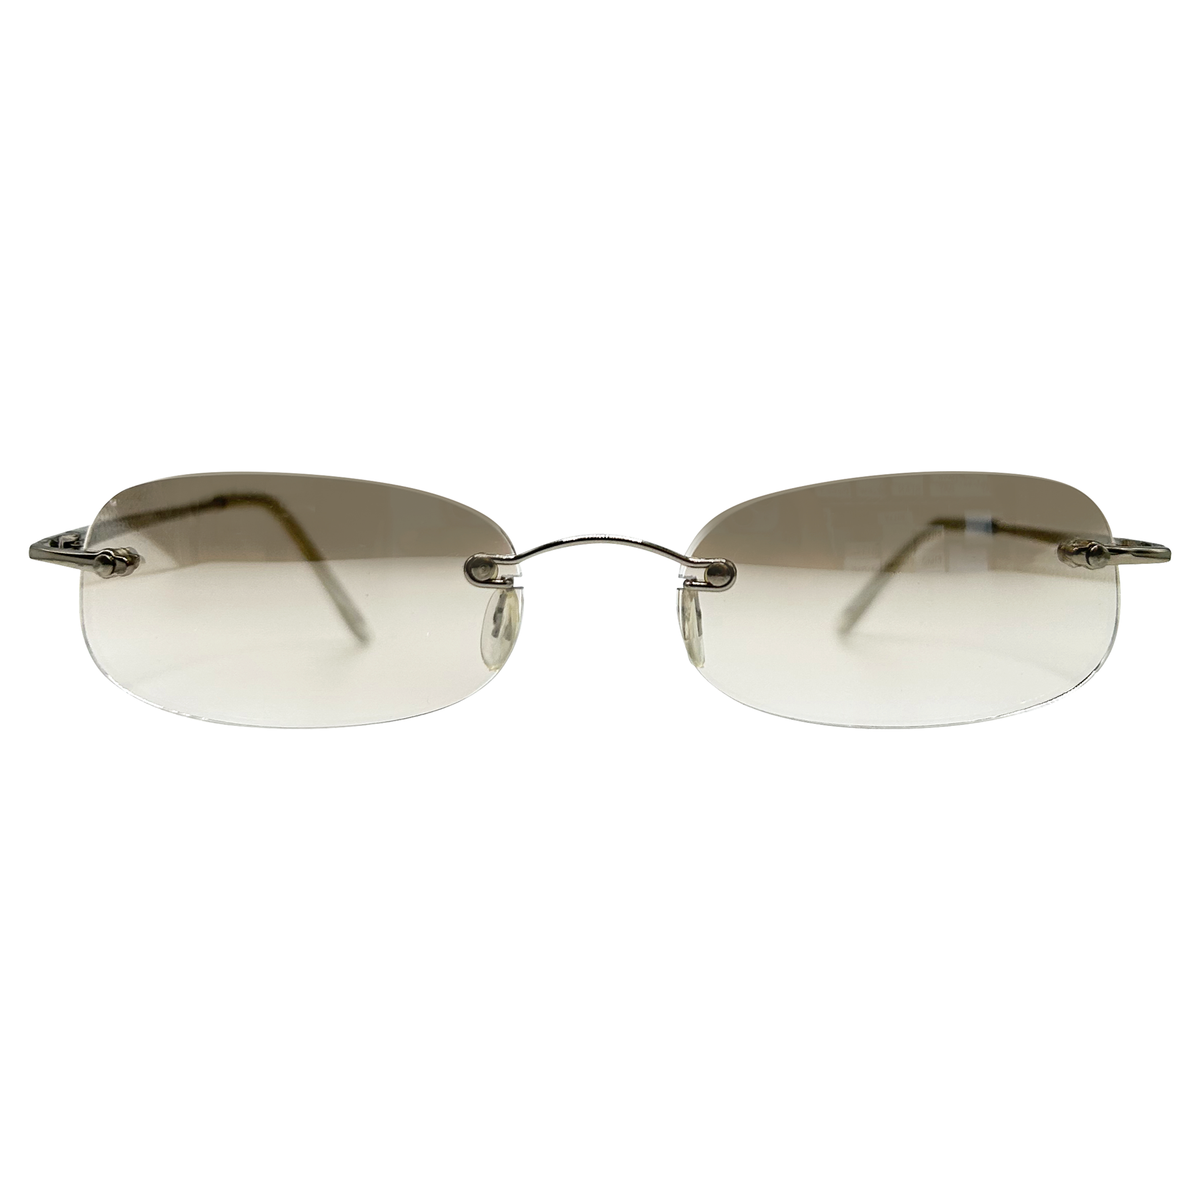 Chanel model 05253 rare lunette brille sunglasses from the 90s